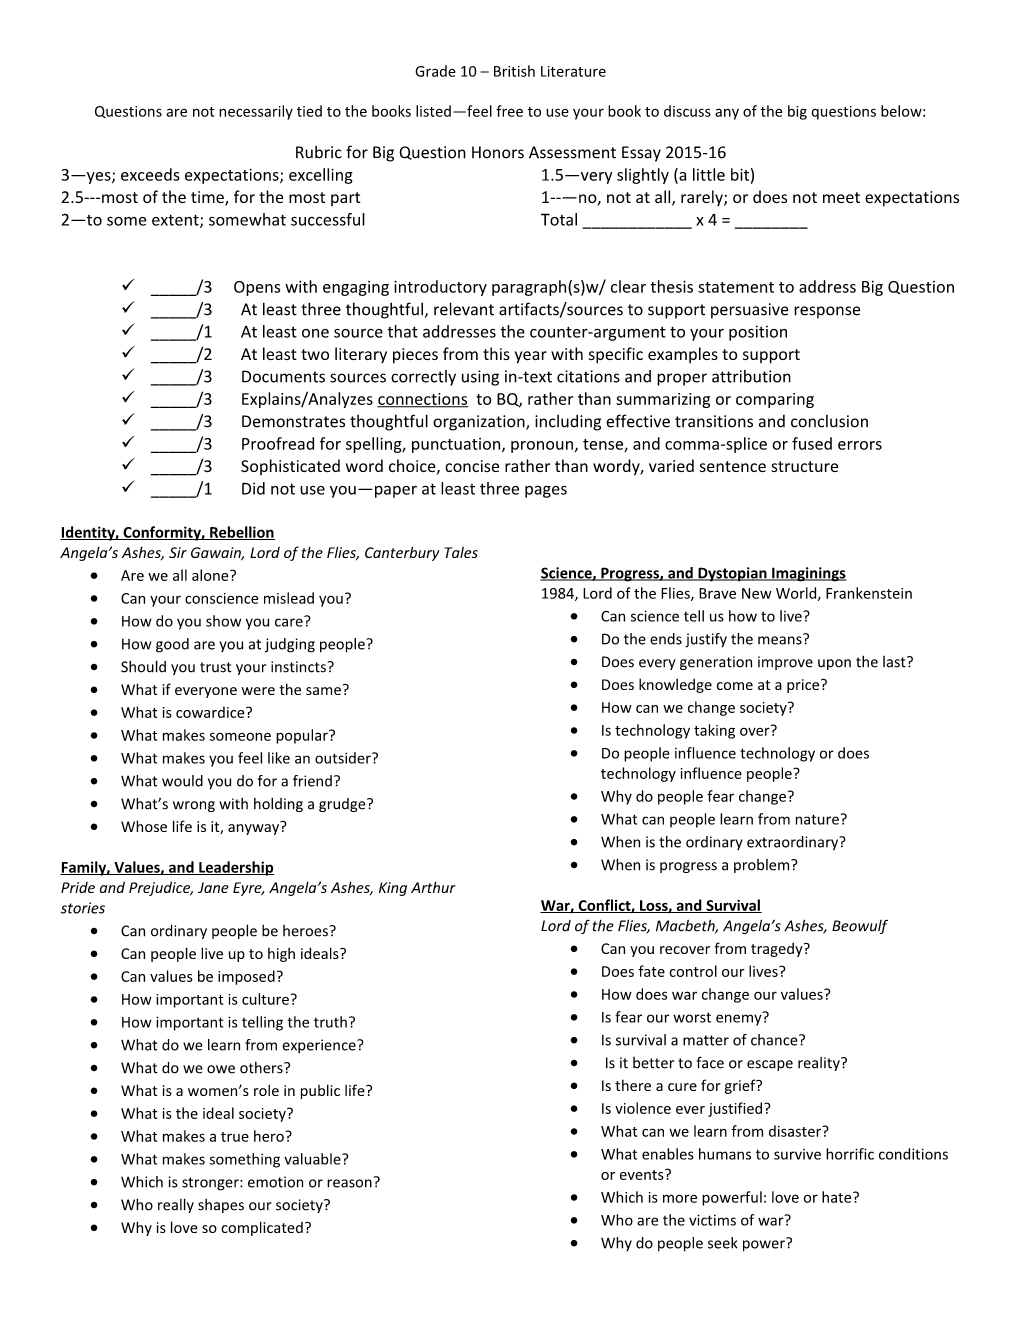 Rubric for Big Questionhonors Assessment Essay 2015-16